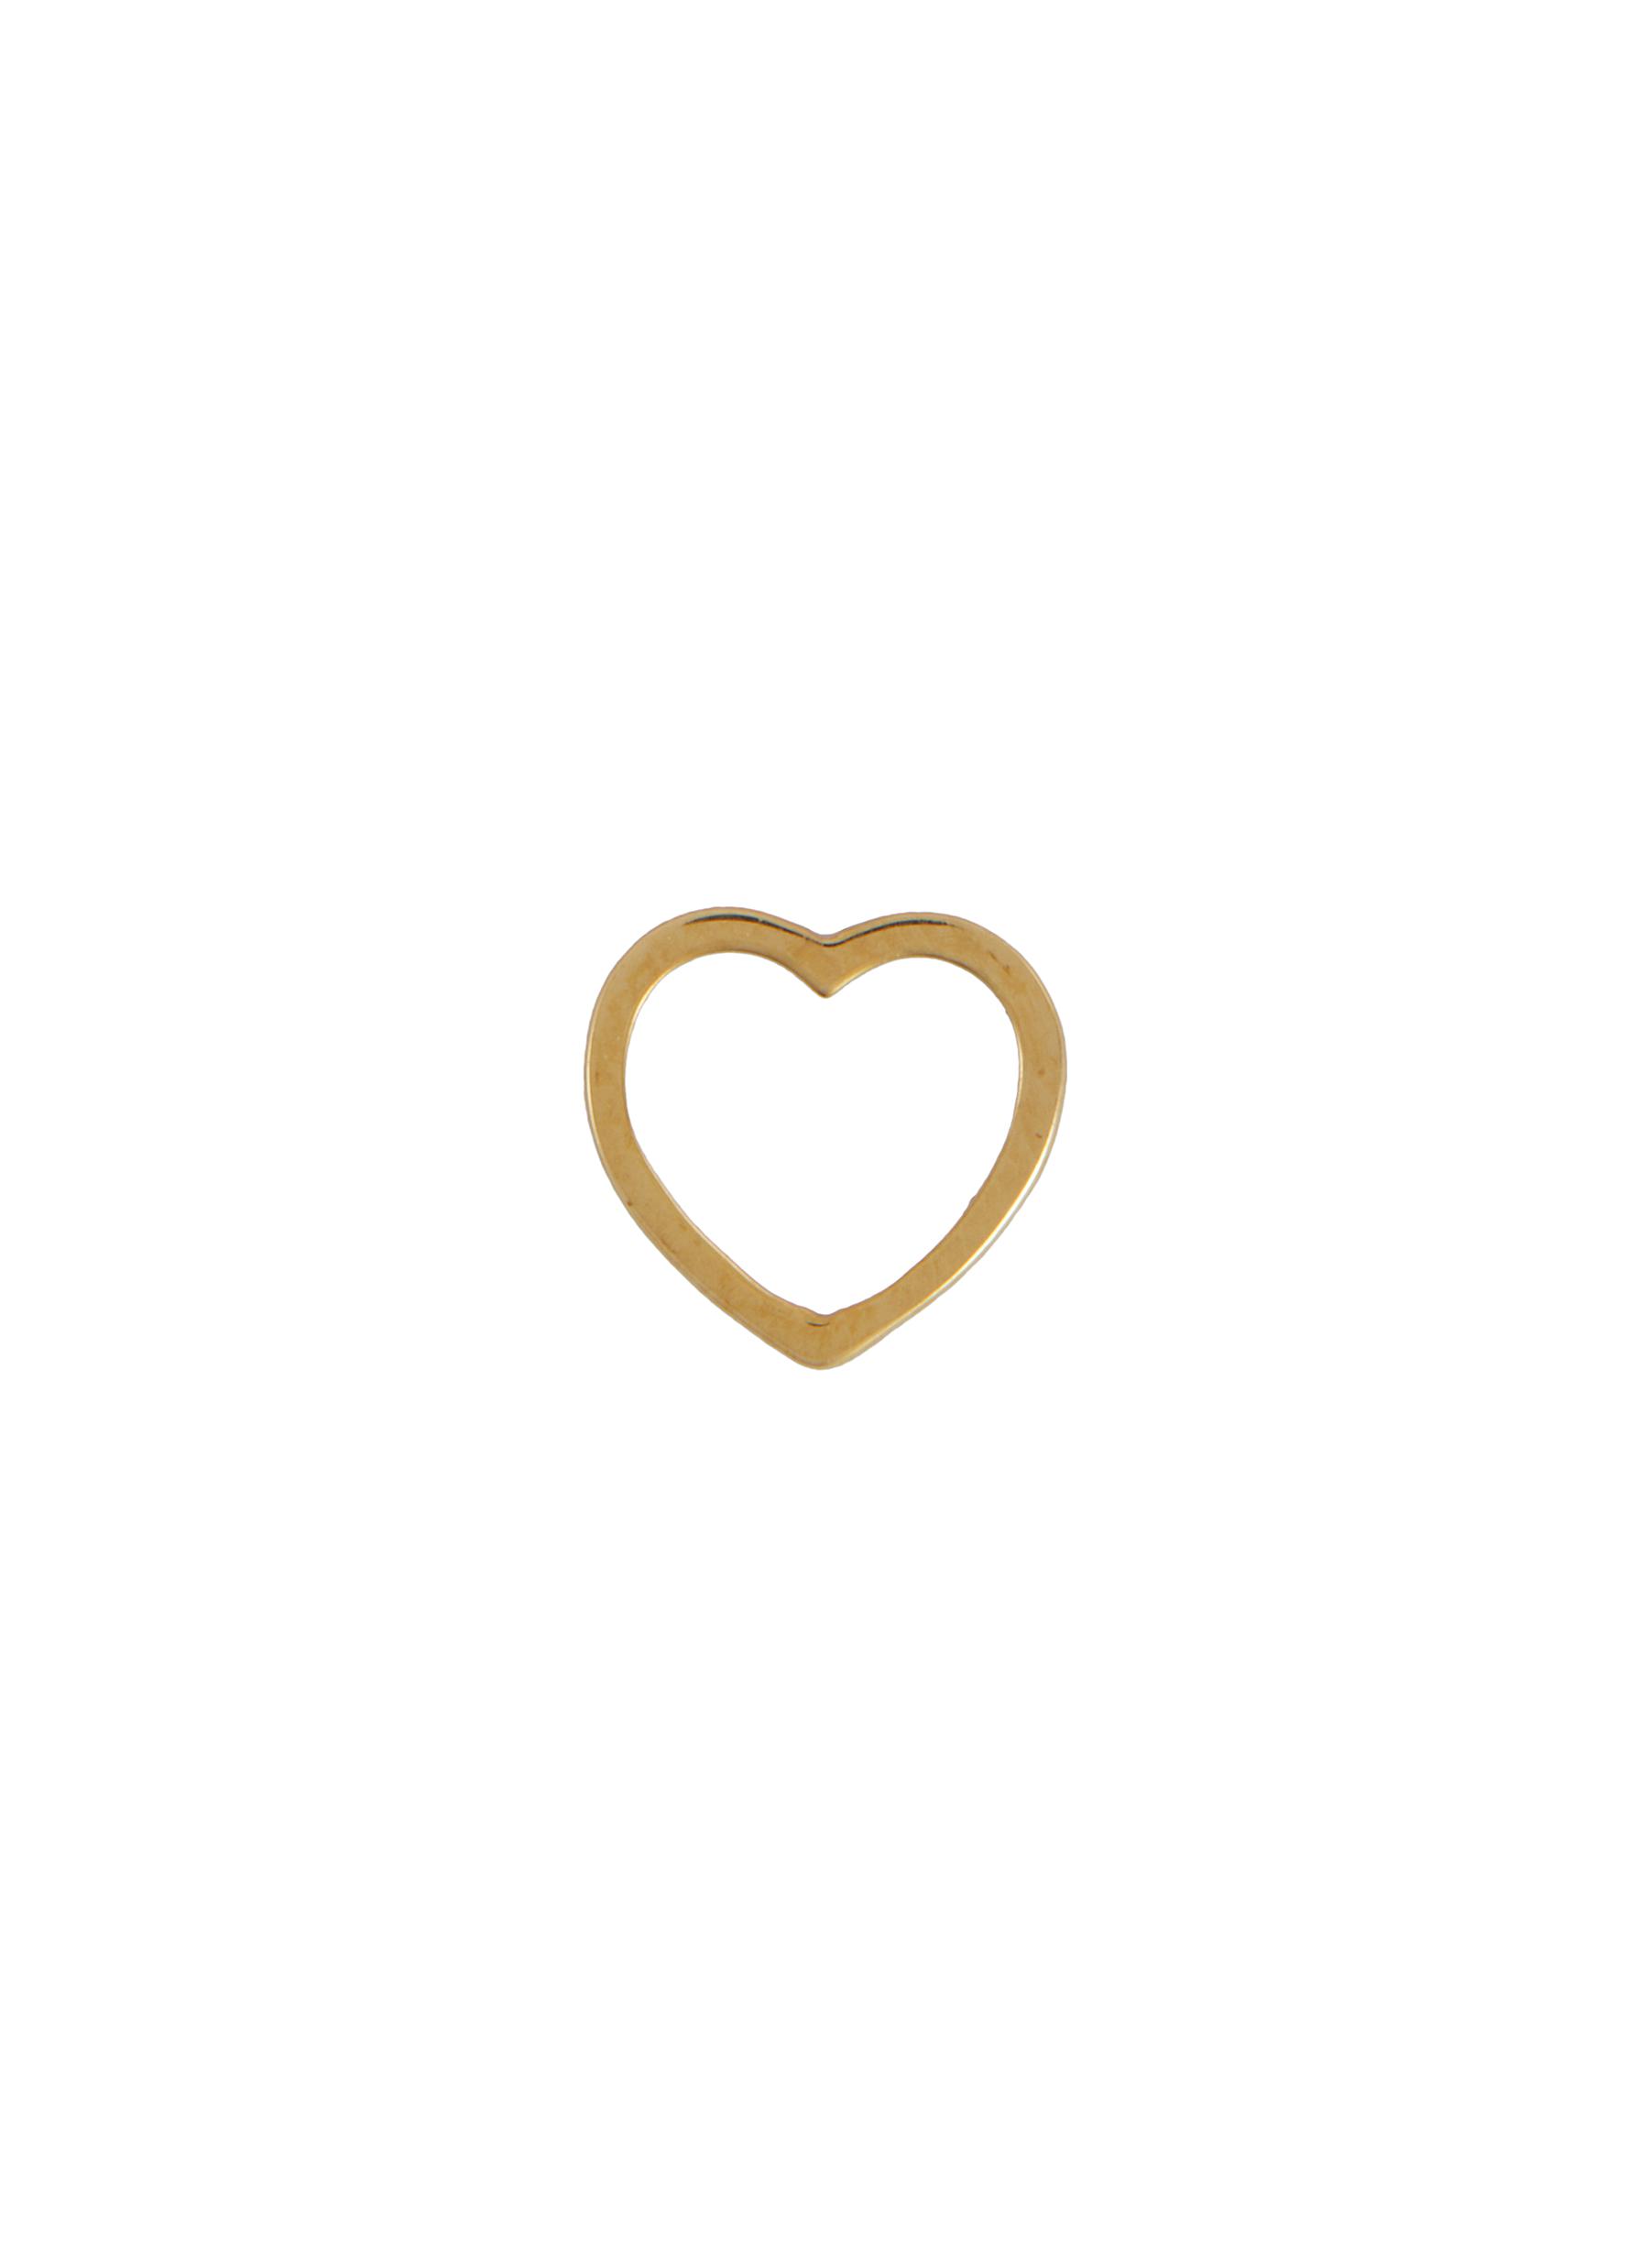 Loquet London 'heart' 18k Gold Charm